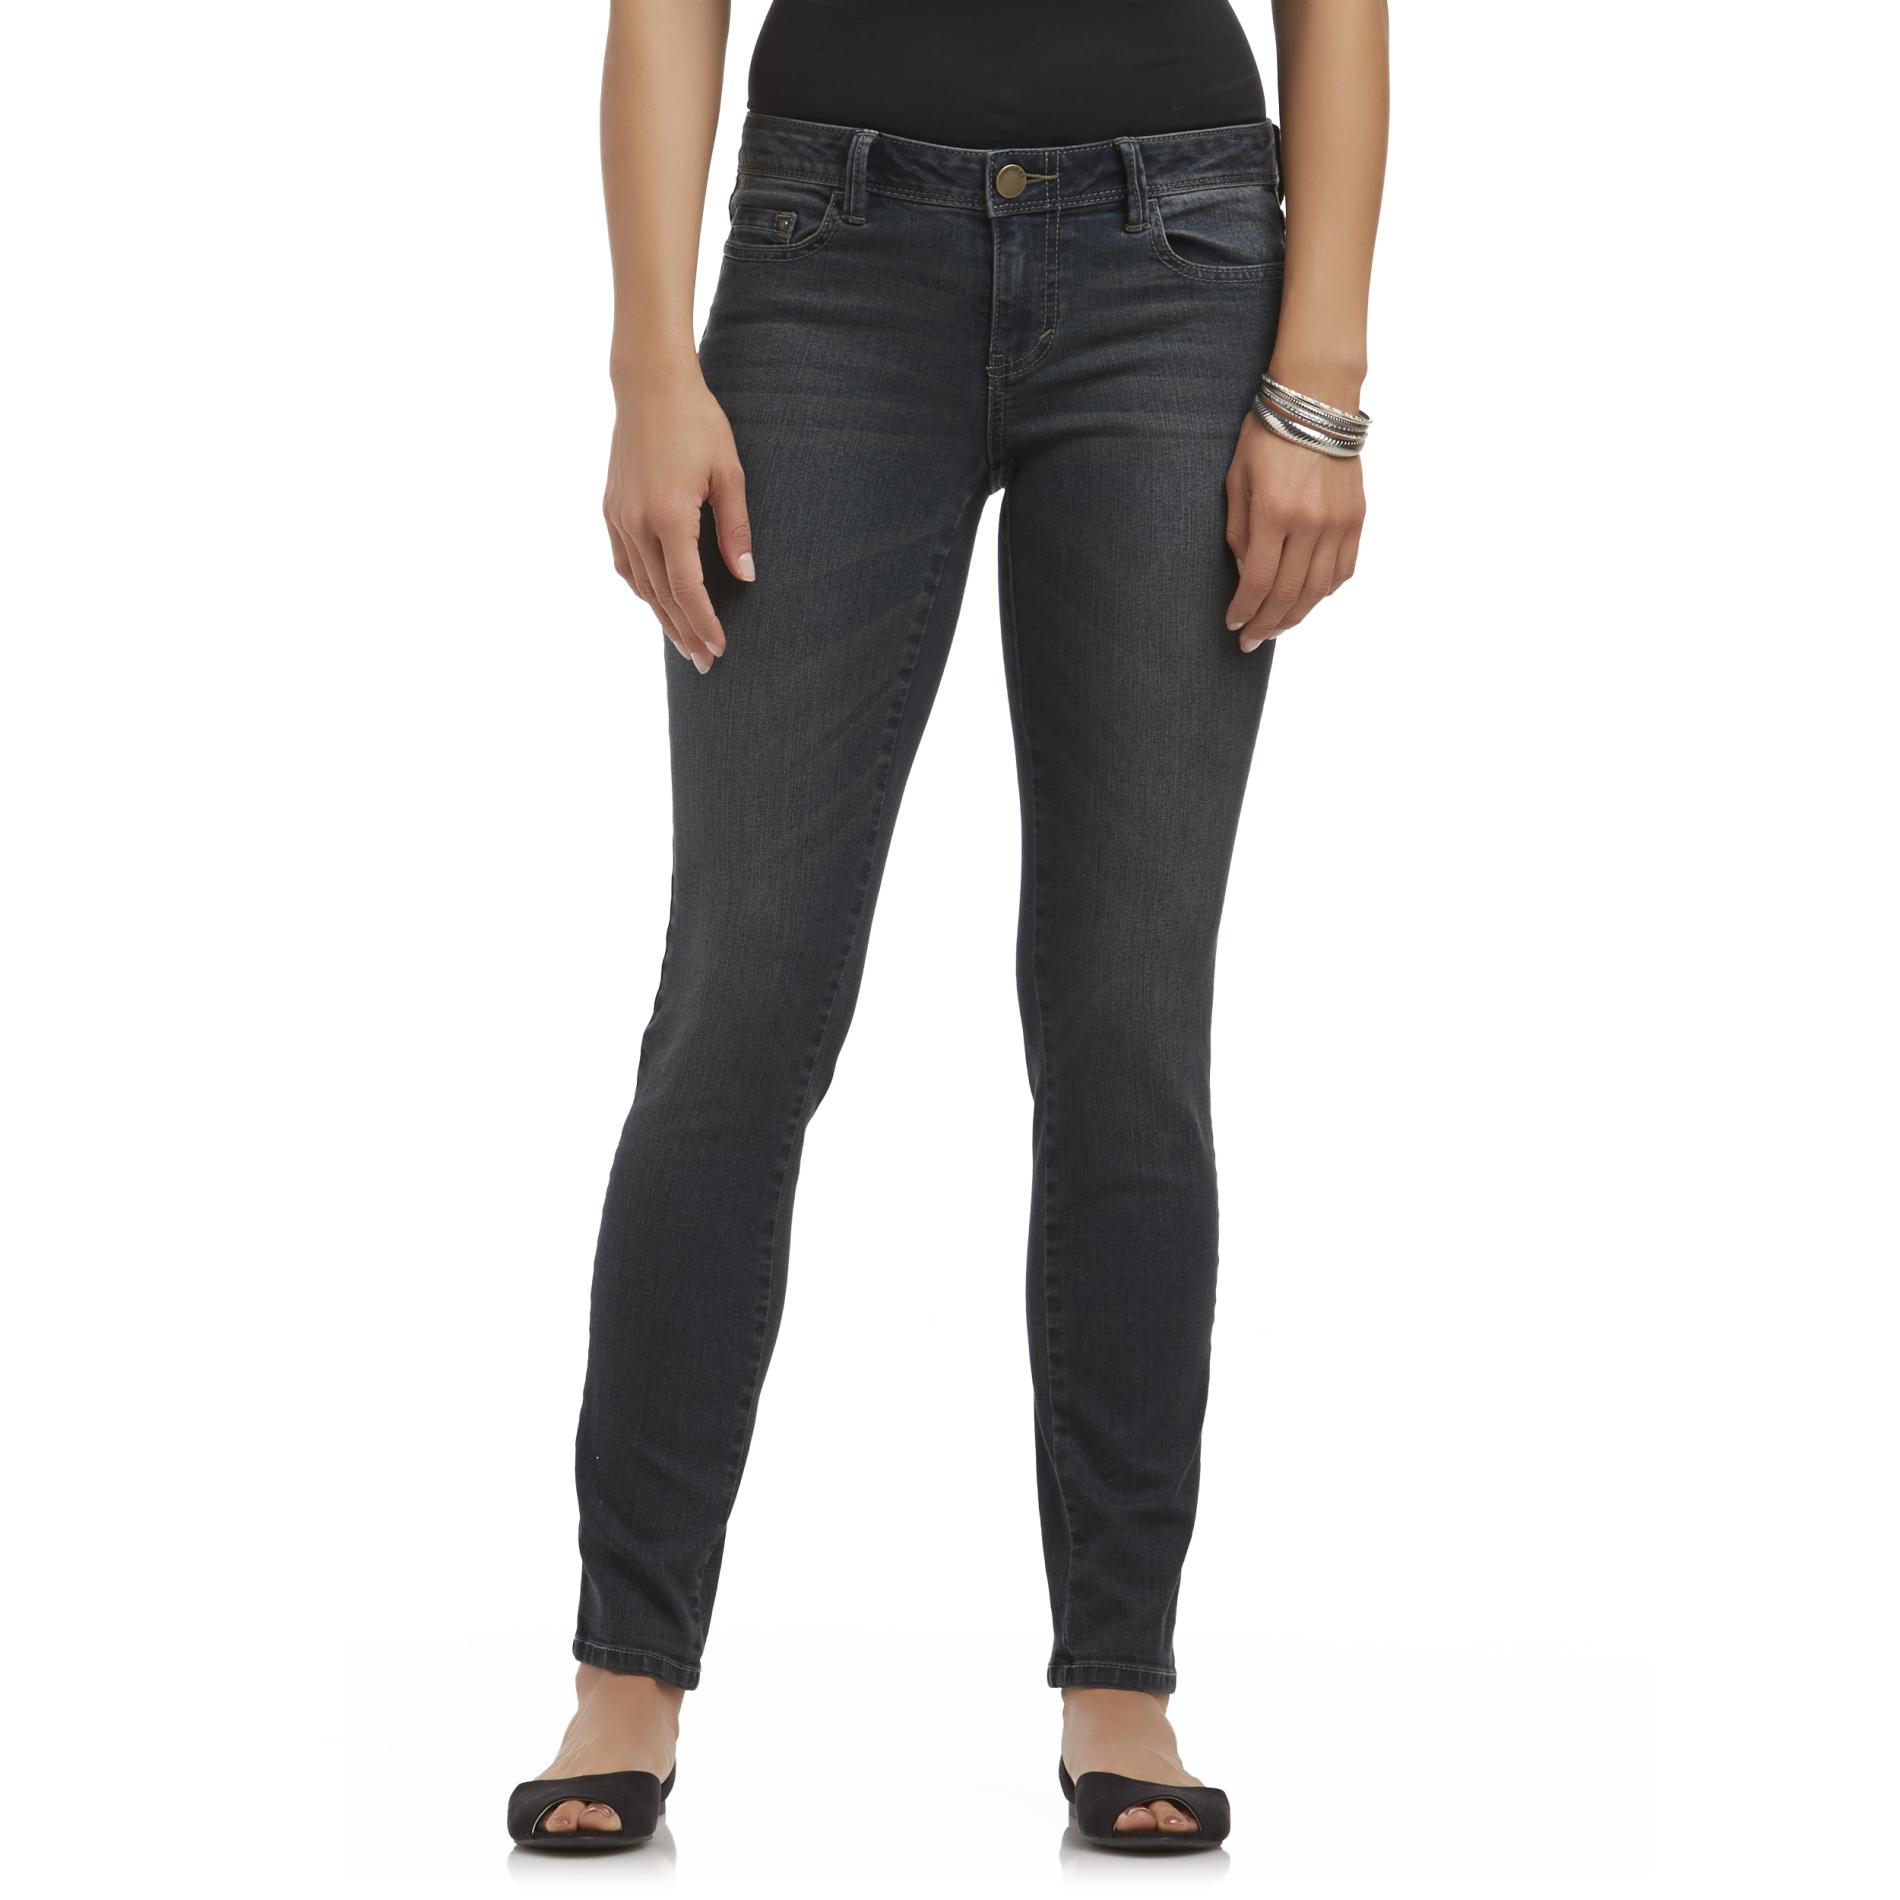 Route 66 Women's Skinny Jeans